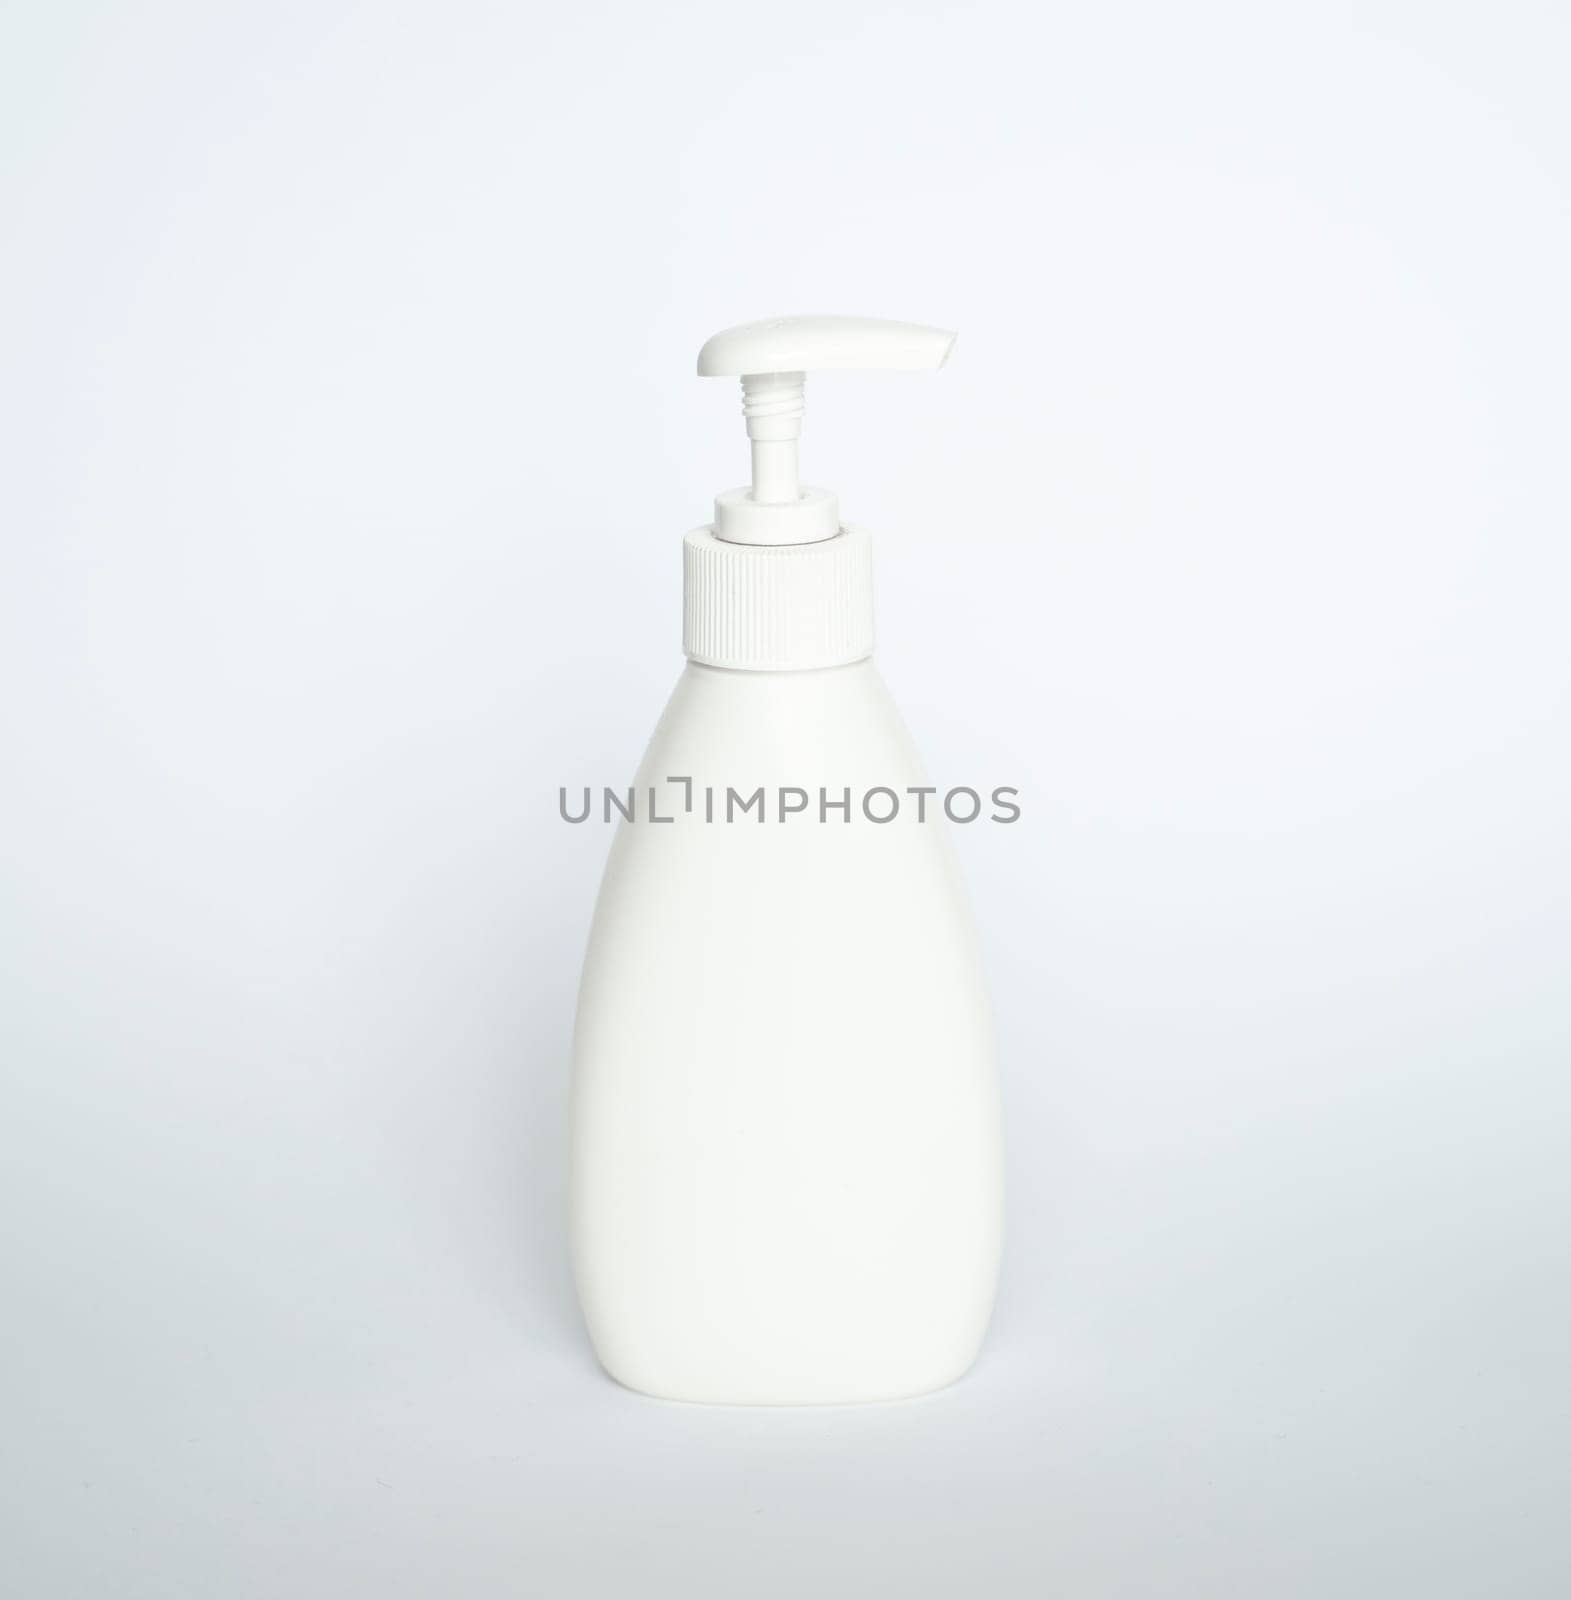 White plastic bottle used for shampoo or soap. Mock up template for design